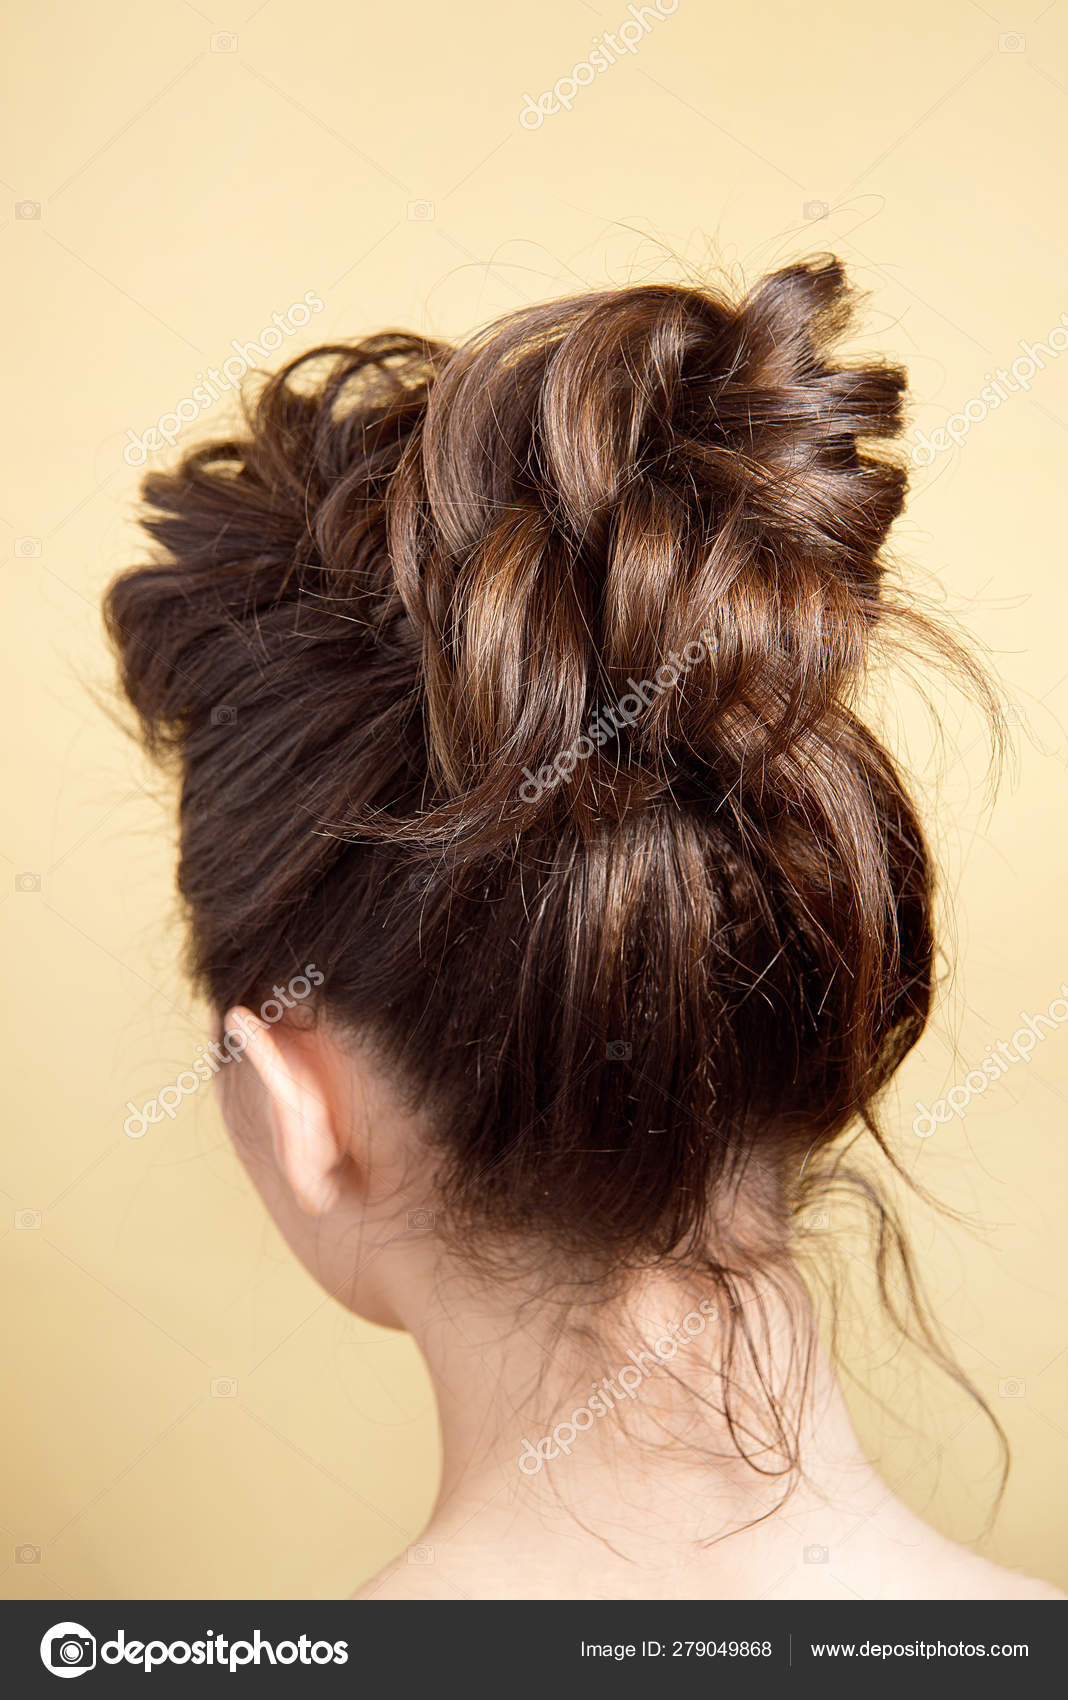 Messy hair bun Stock Photos, Royalty Free Messy hair bun Images |  Depositphotos